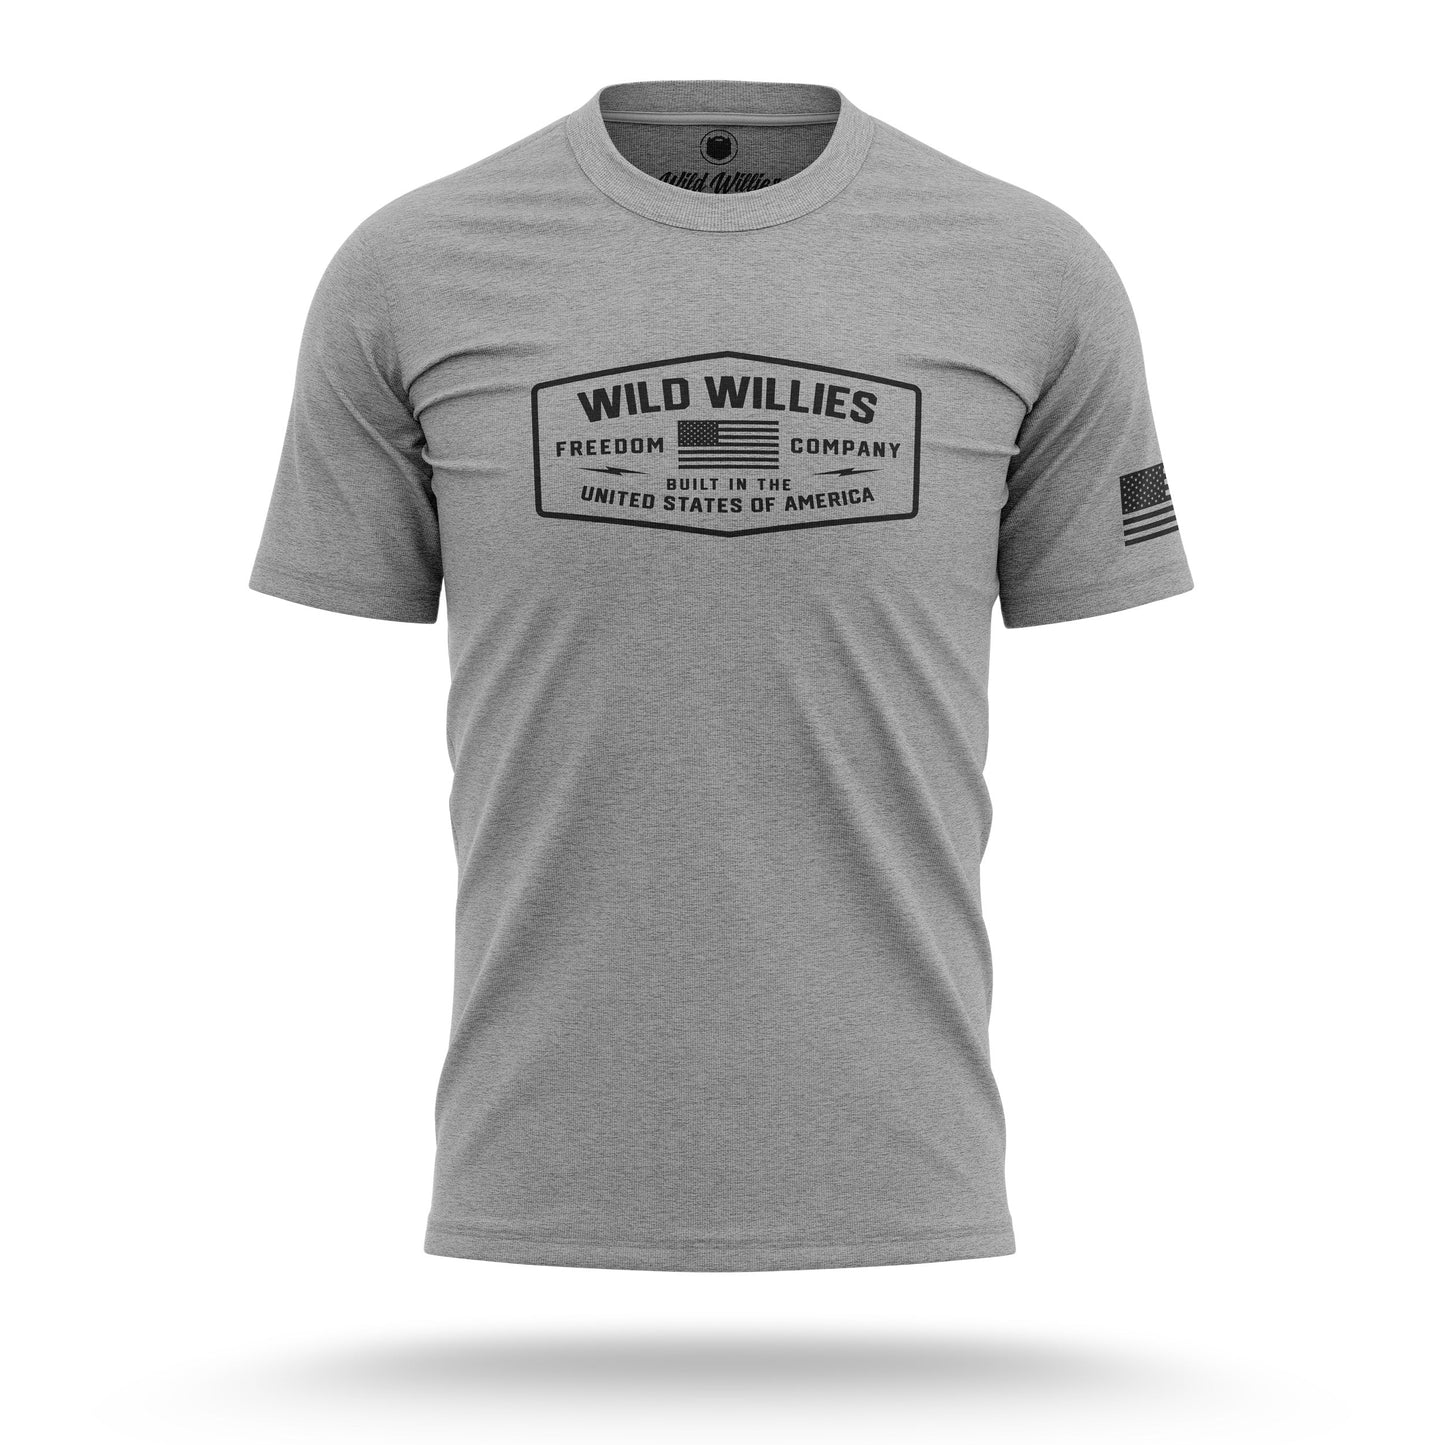 Freedom Co. Crest - T-Shirt T-Shirt Wild-Willies S Gray 